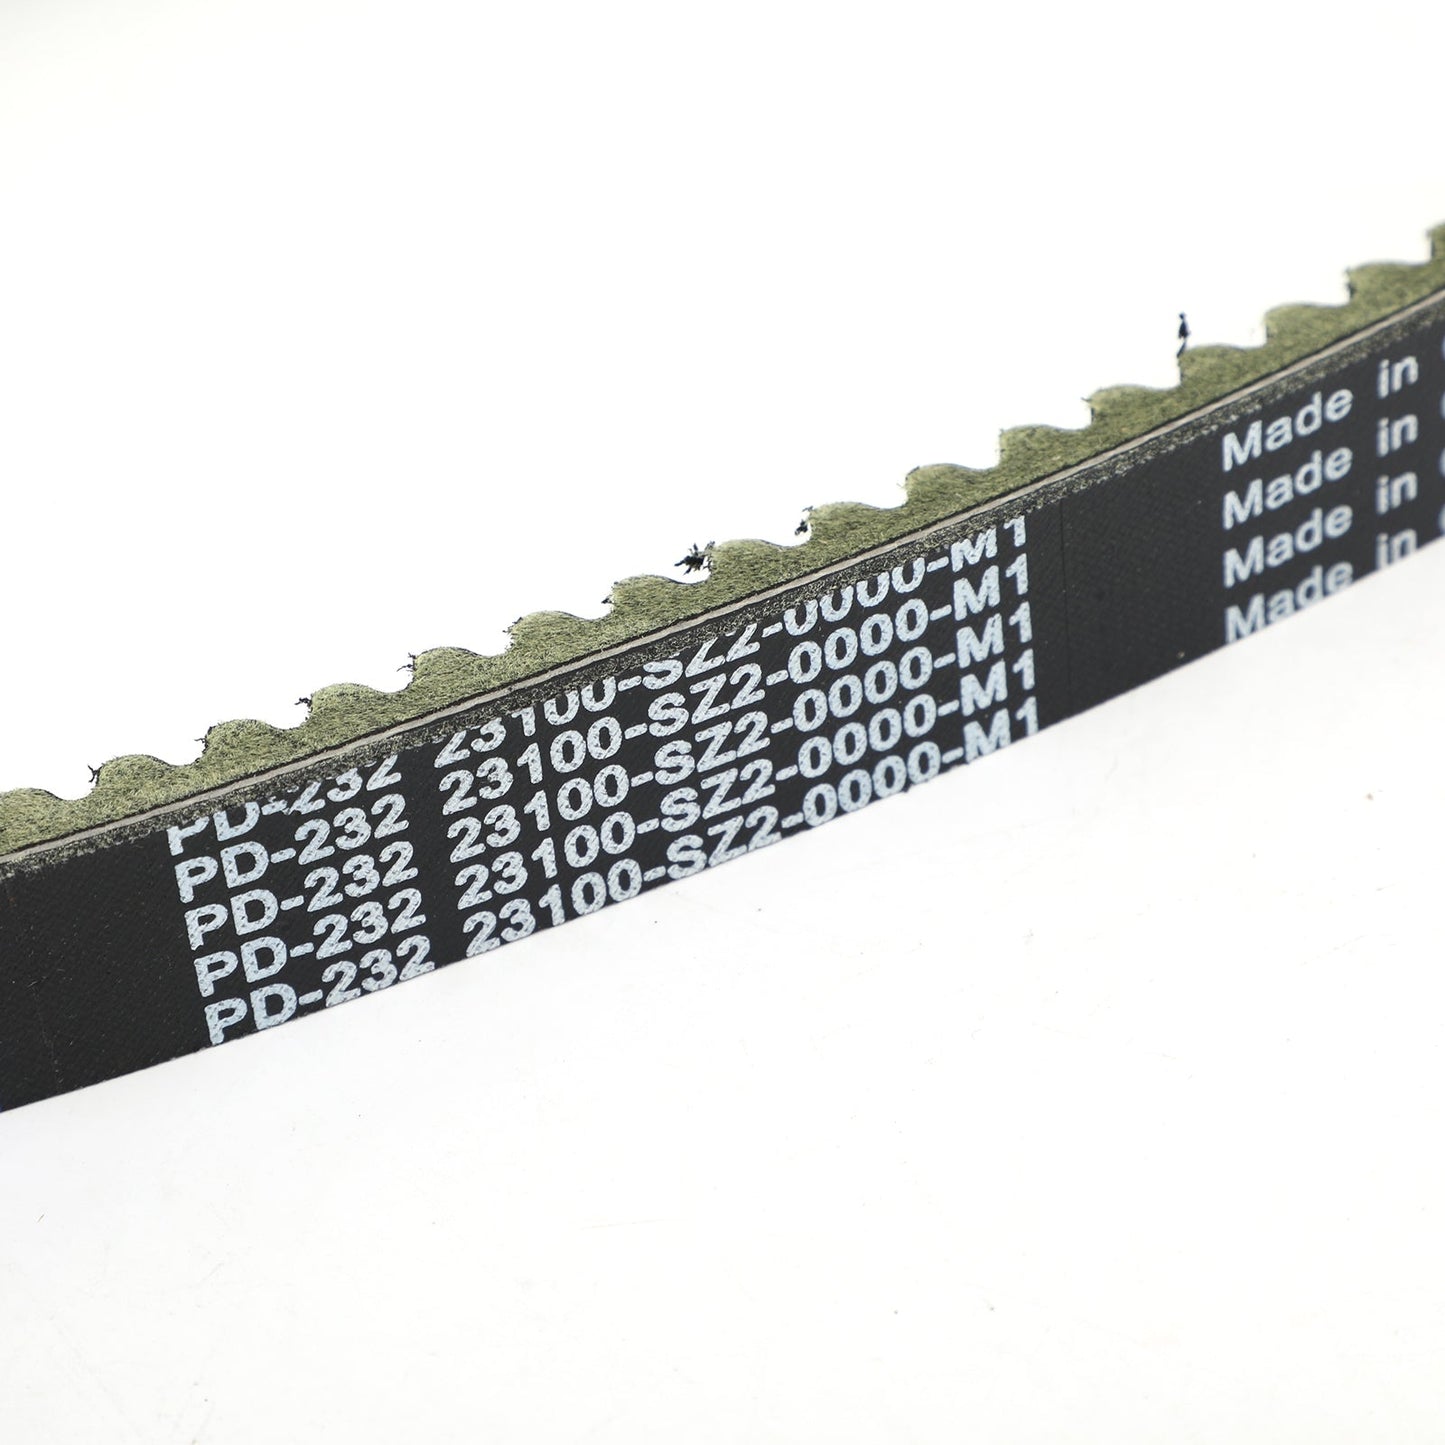 External Final Transmission Belt for Daelim NEW S300 23100-SZ2-0000-M1